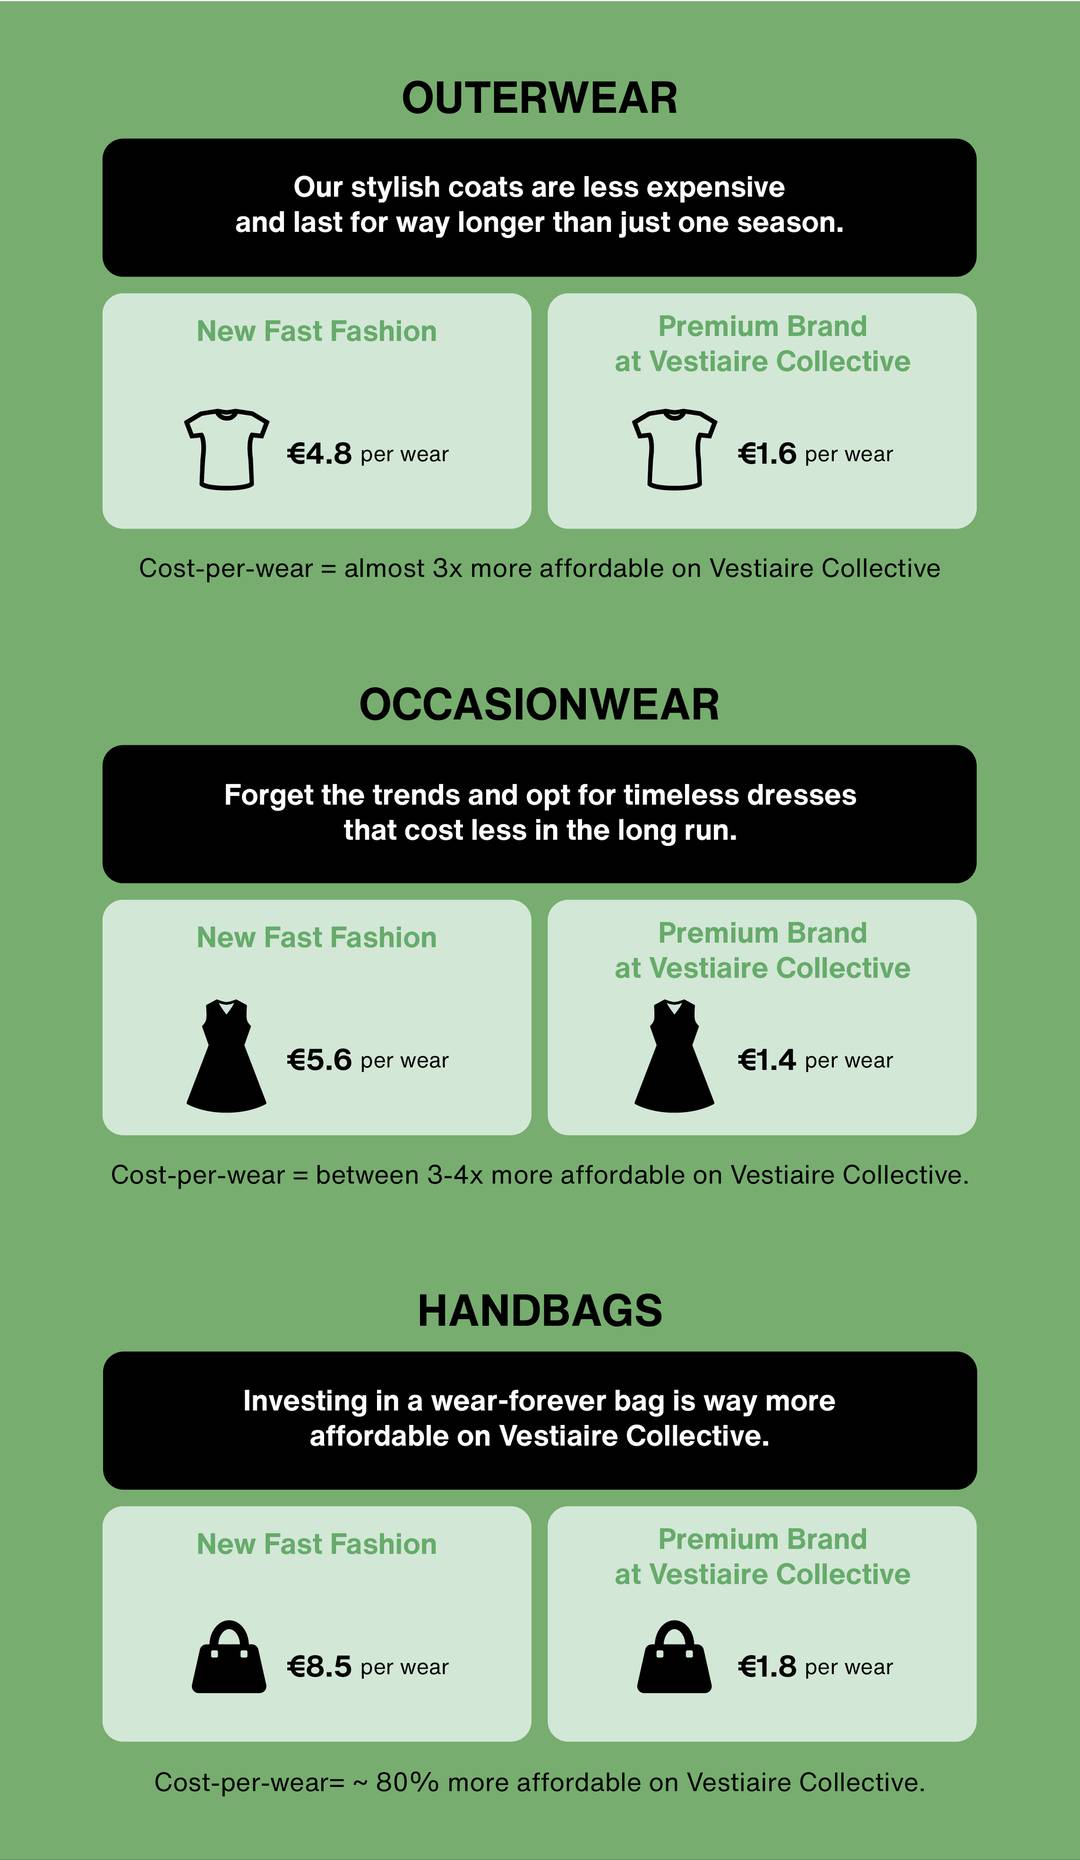 Calculation of cost-per-wear.